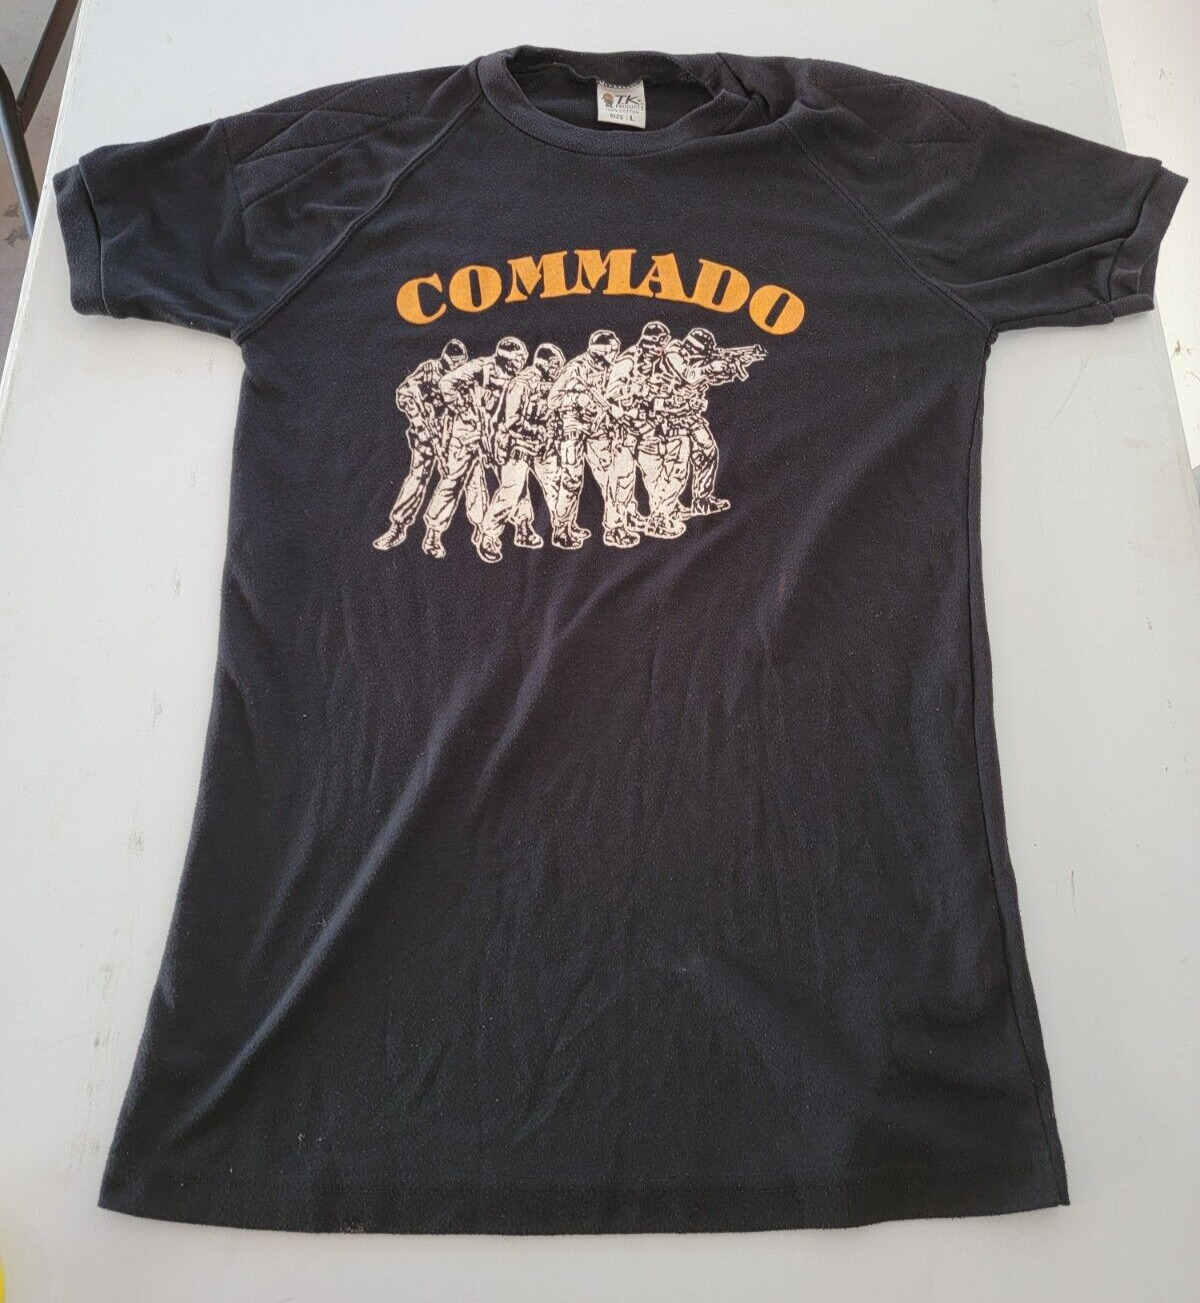 Thailand Marine Corps COMMADO Commando Military Shirt